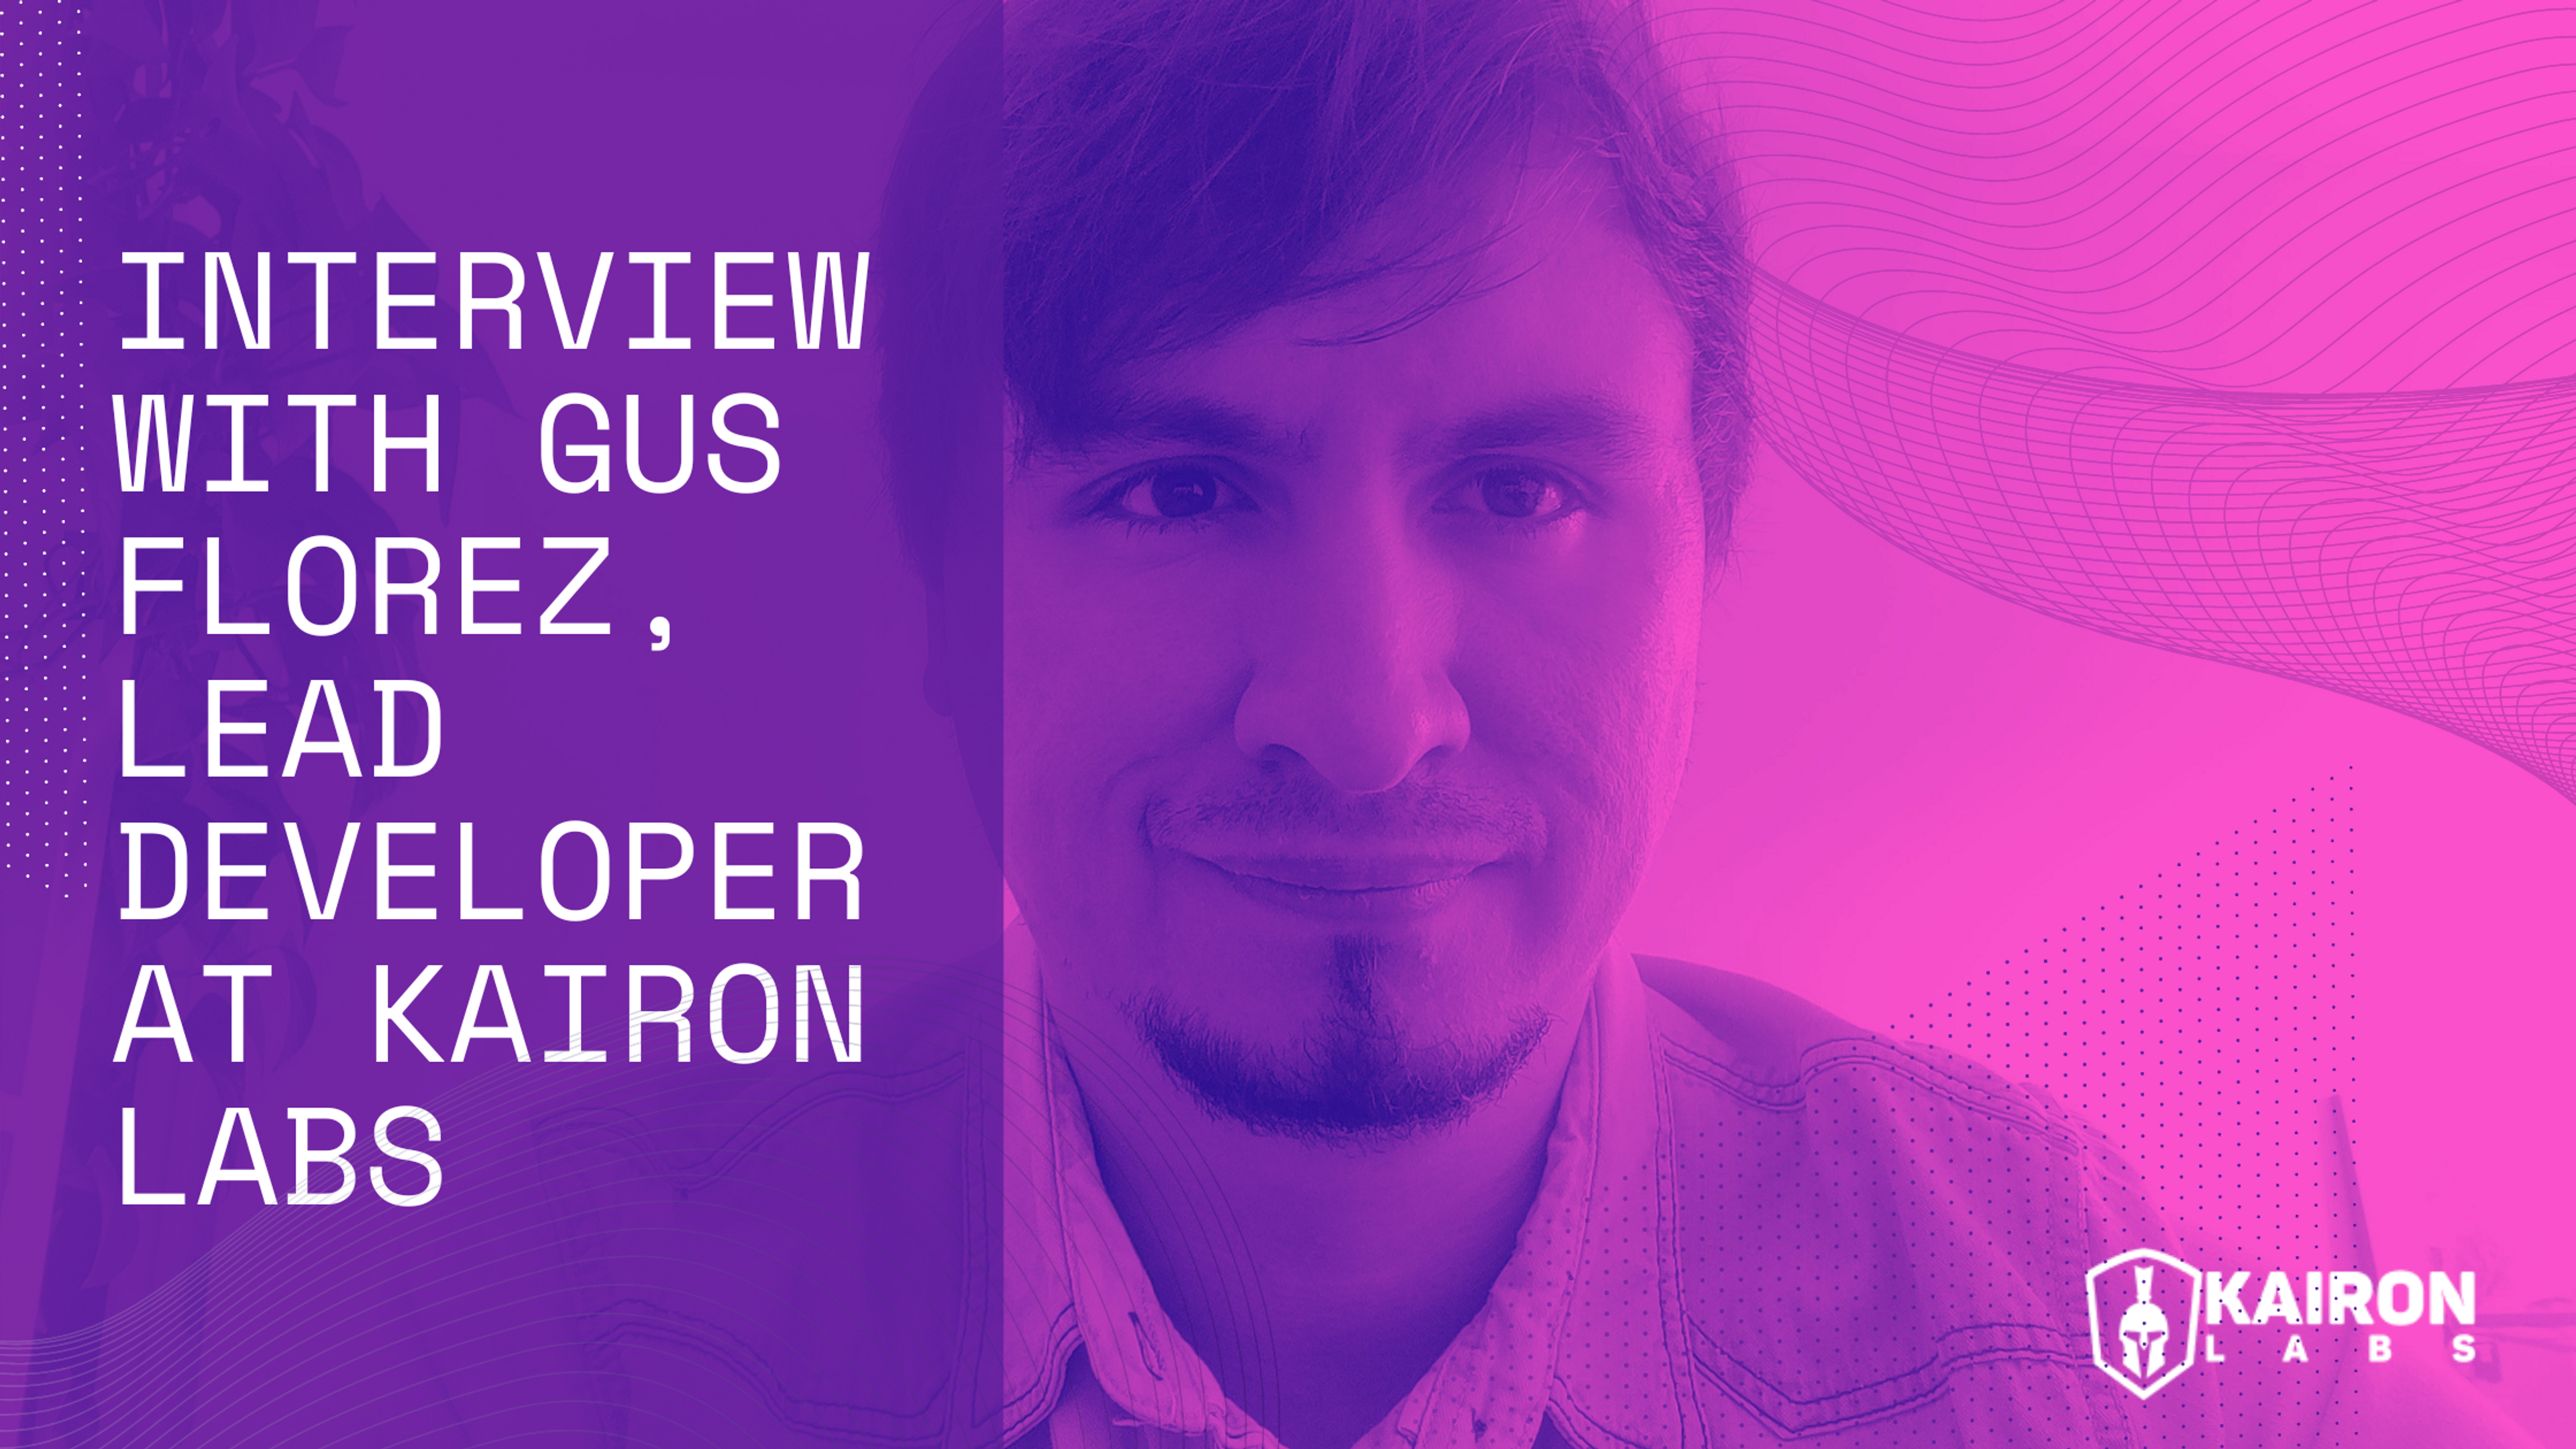 gus florez_interview with developer lead at kairon labs